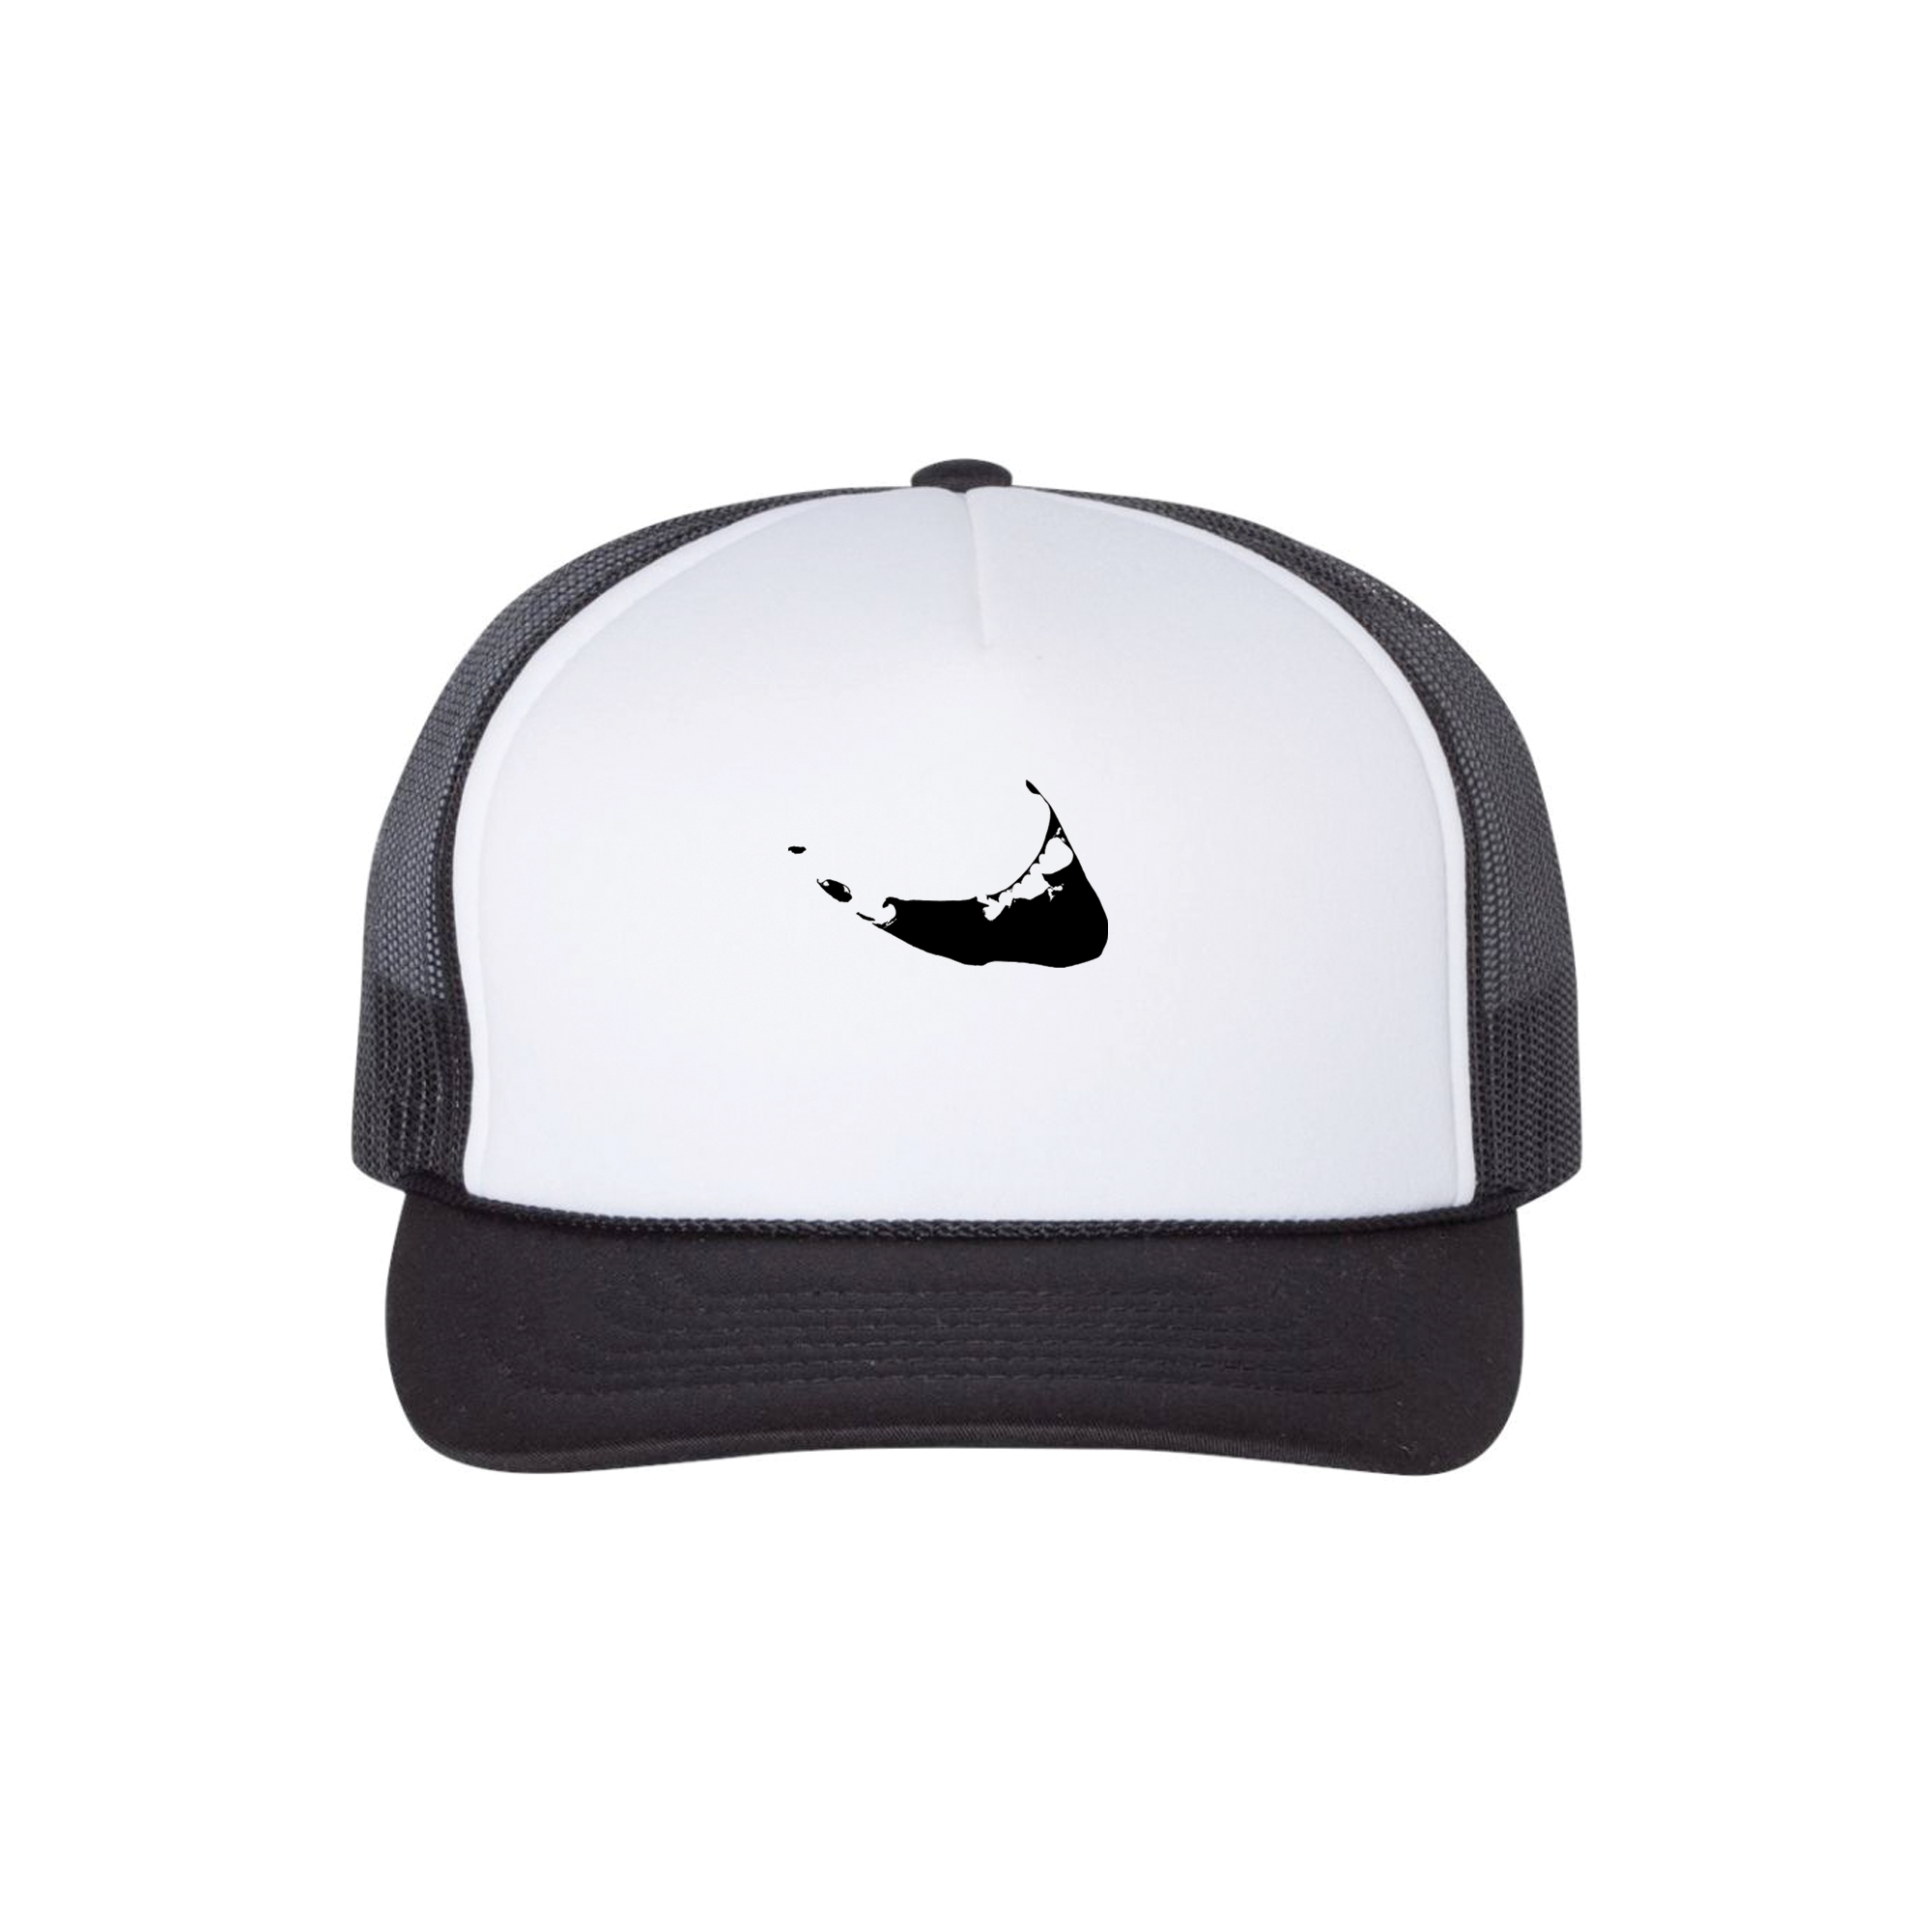 Nantucket Island Hat (White/Black, Black)